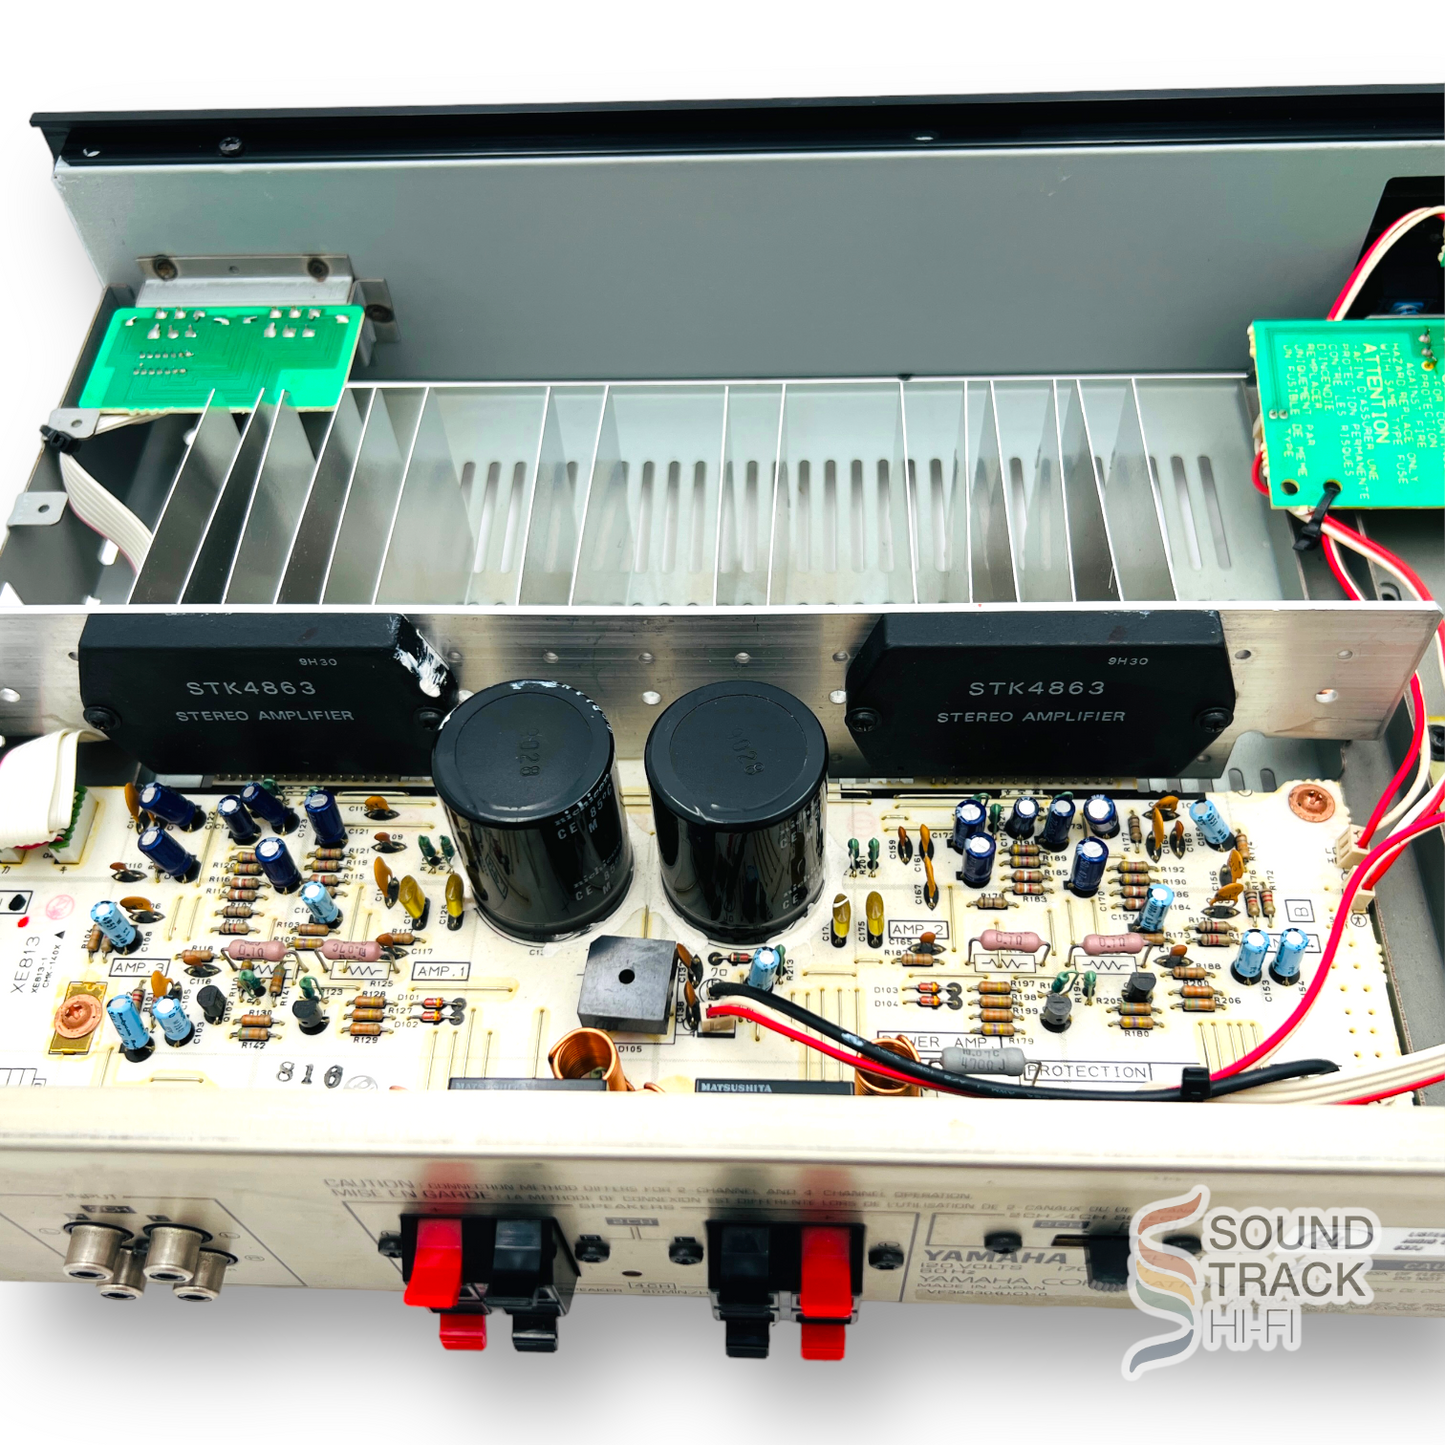 Yamaha MX-35 170 Watt Stereo and 4 Channel Power Amplifier